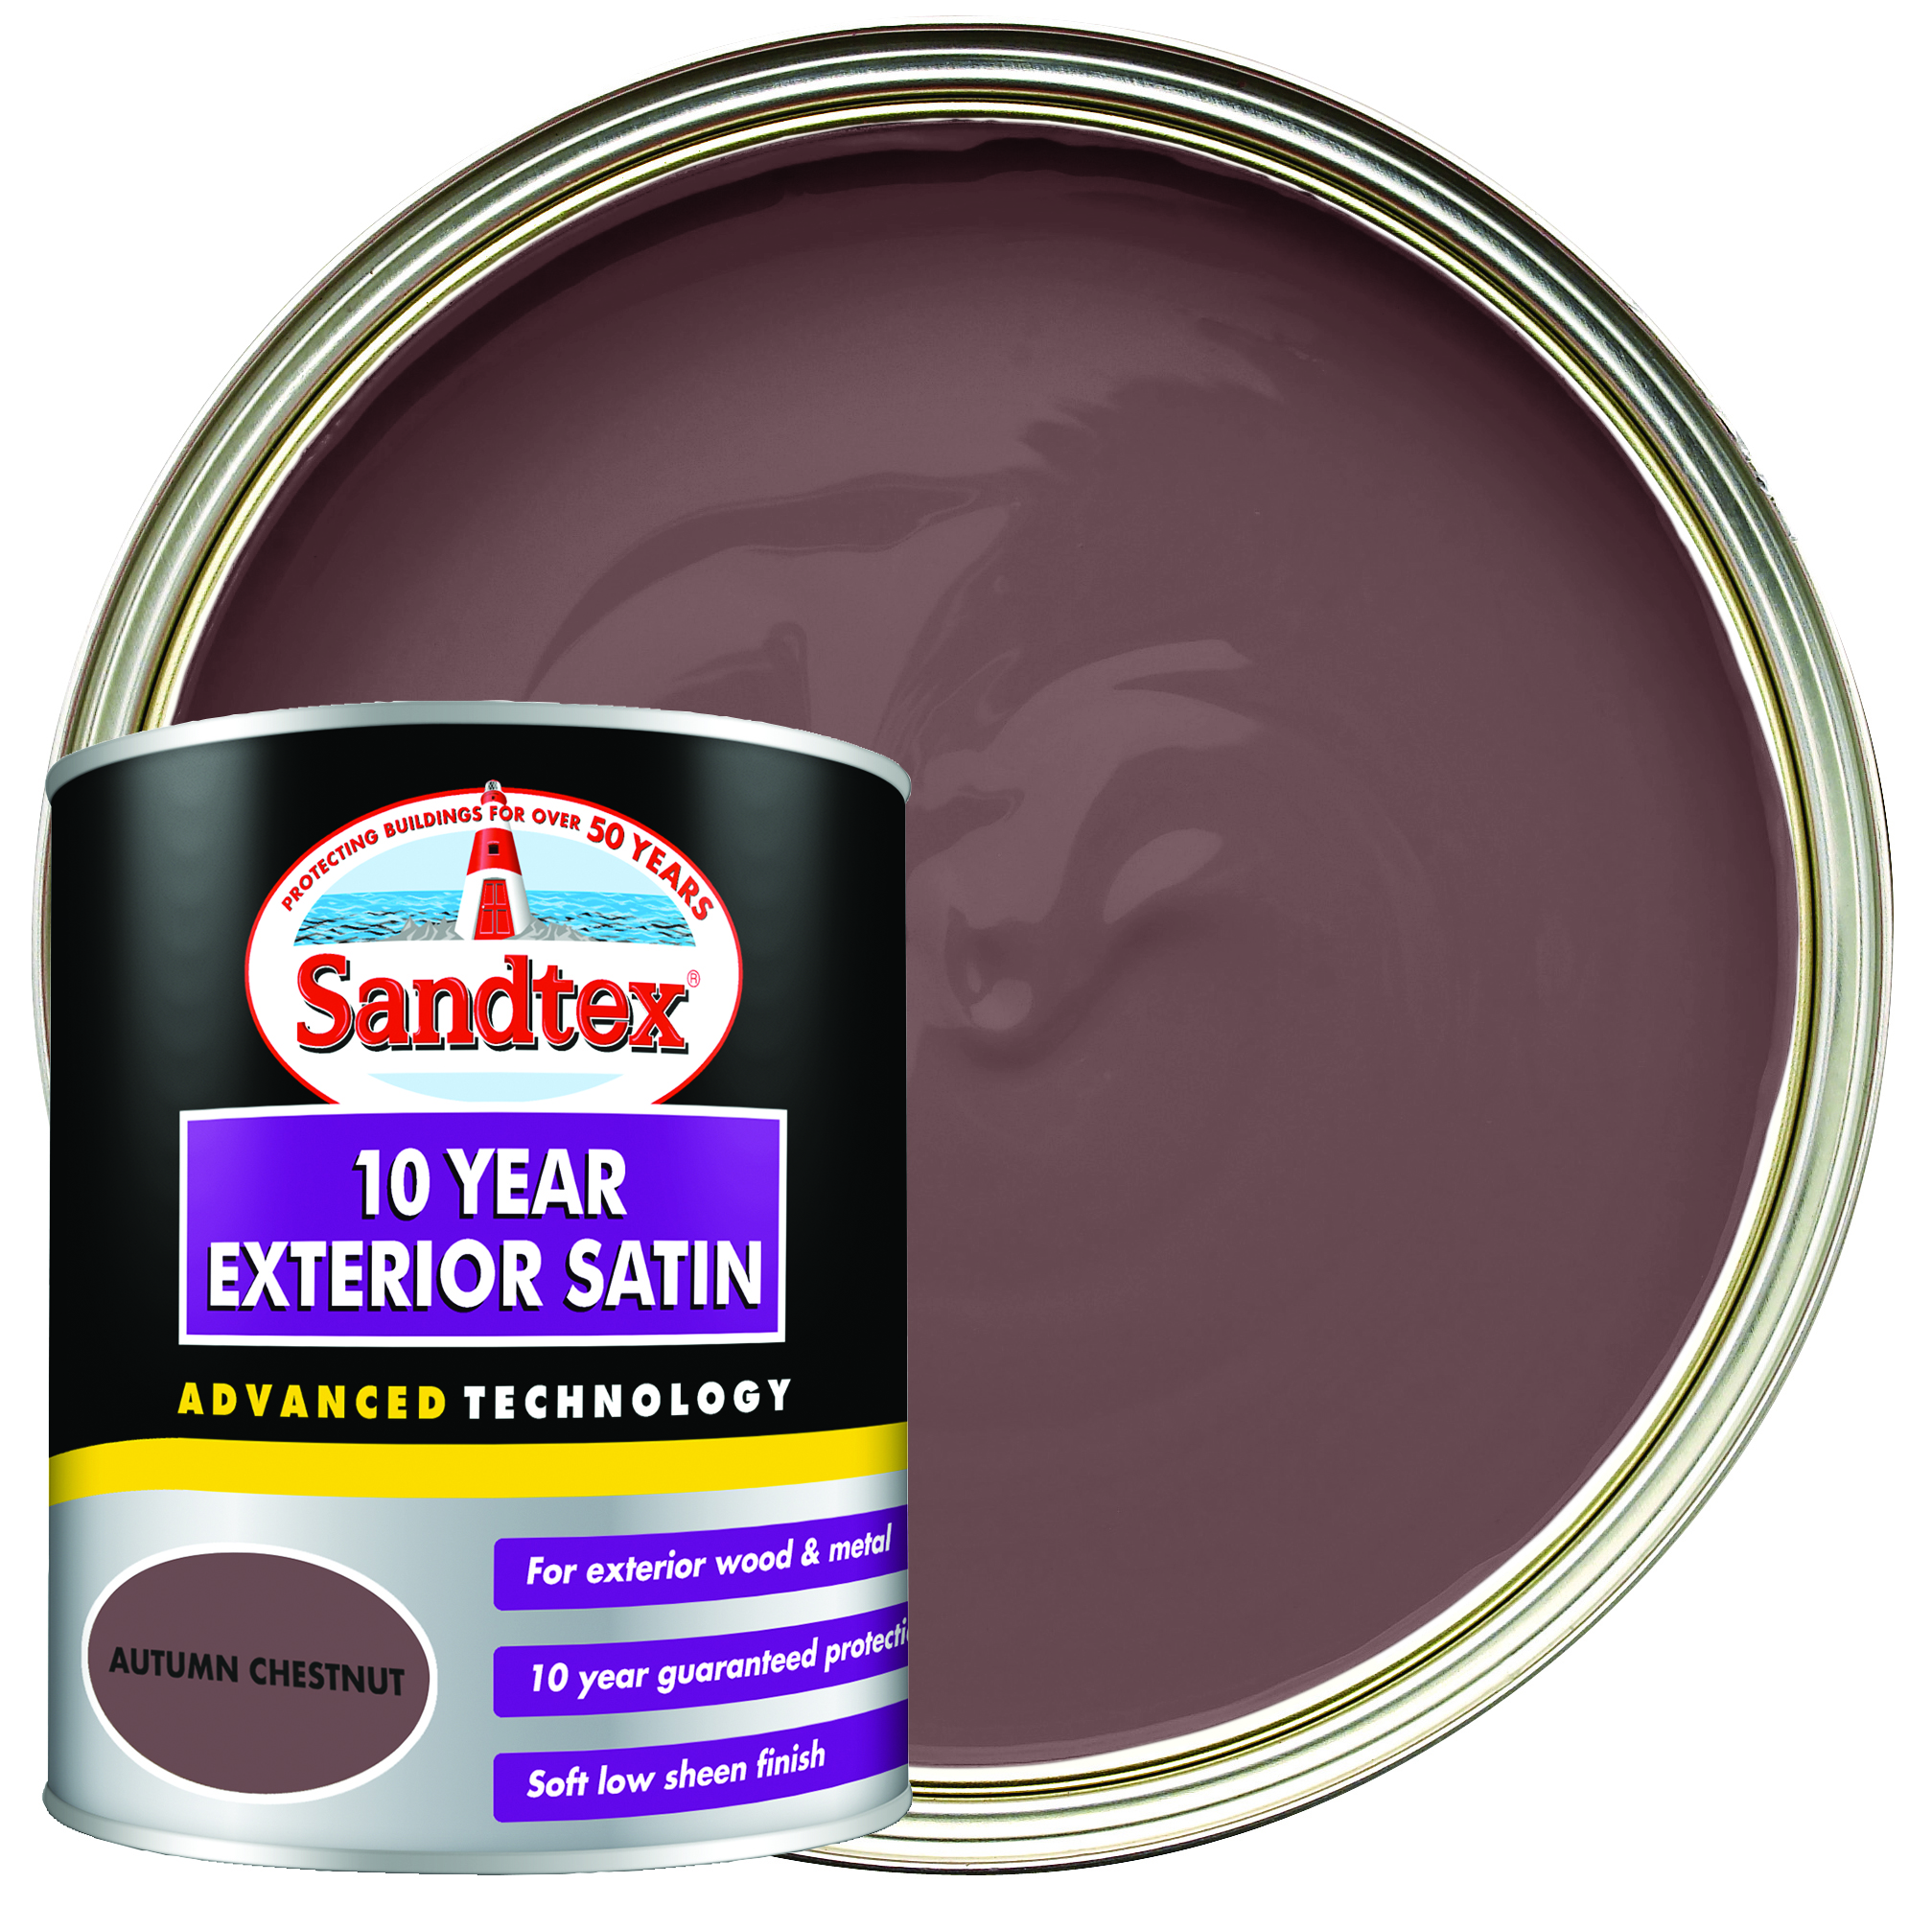 Image of Sandtex 10 Year Exterior Satin Paint - Autumn Chestnut - 750ml